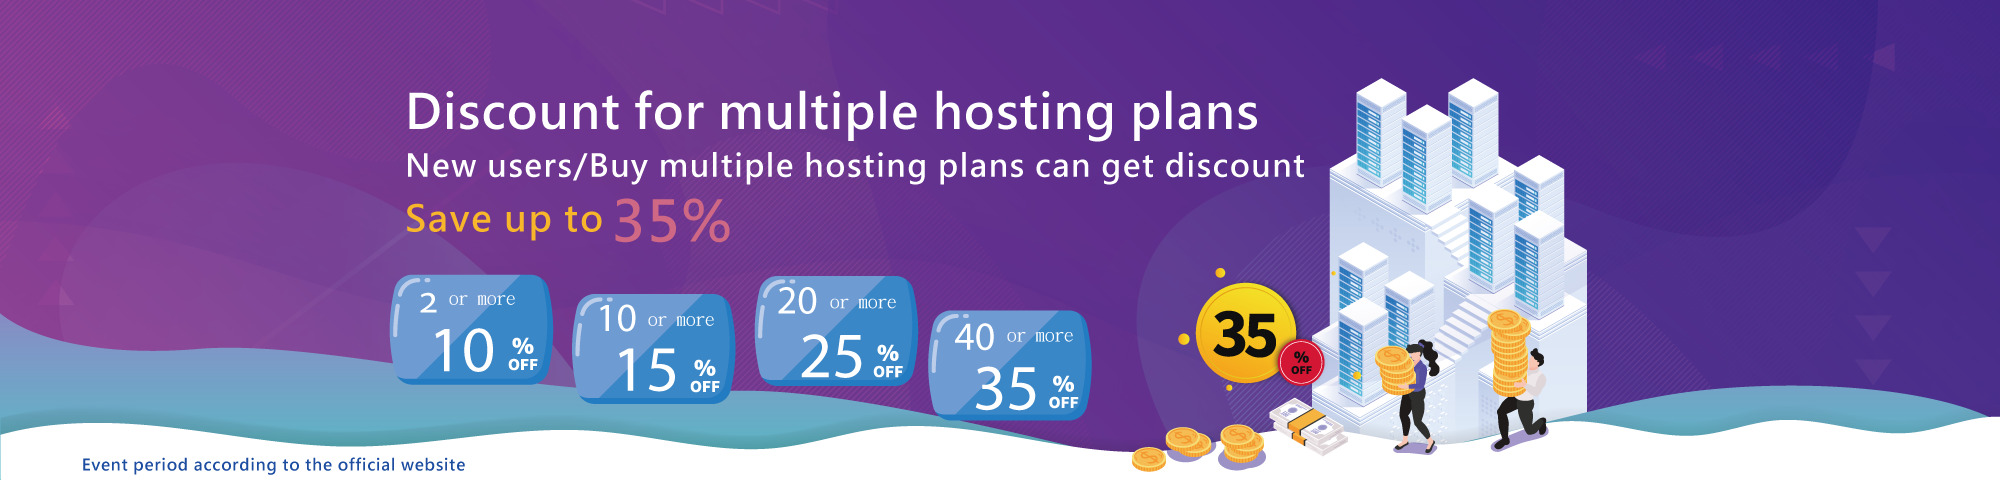 Discount for multiple hosting plans